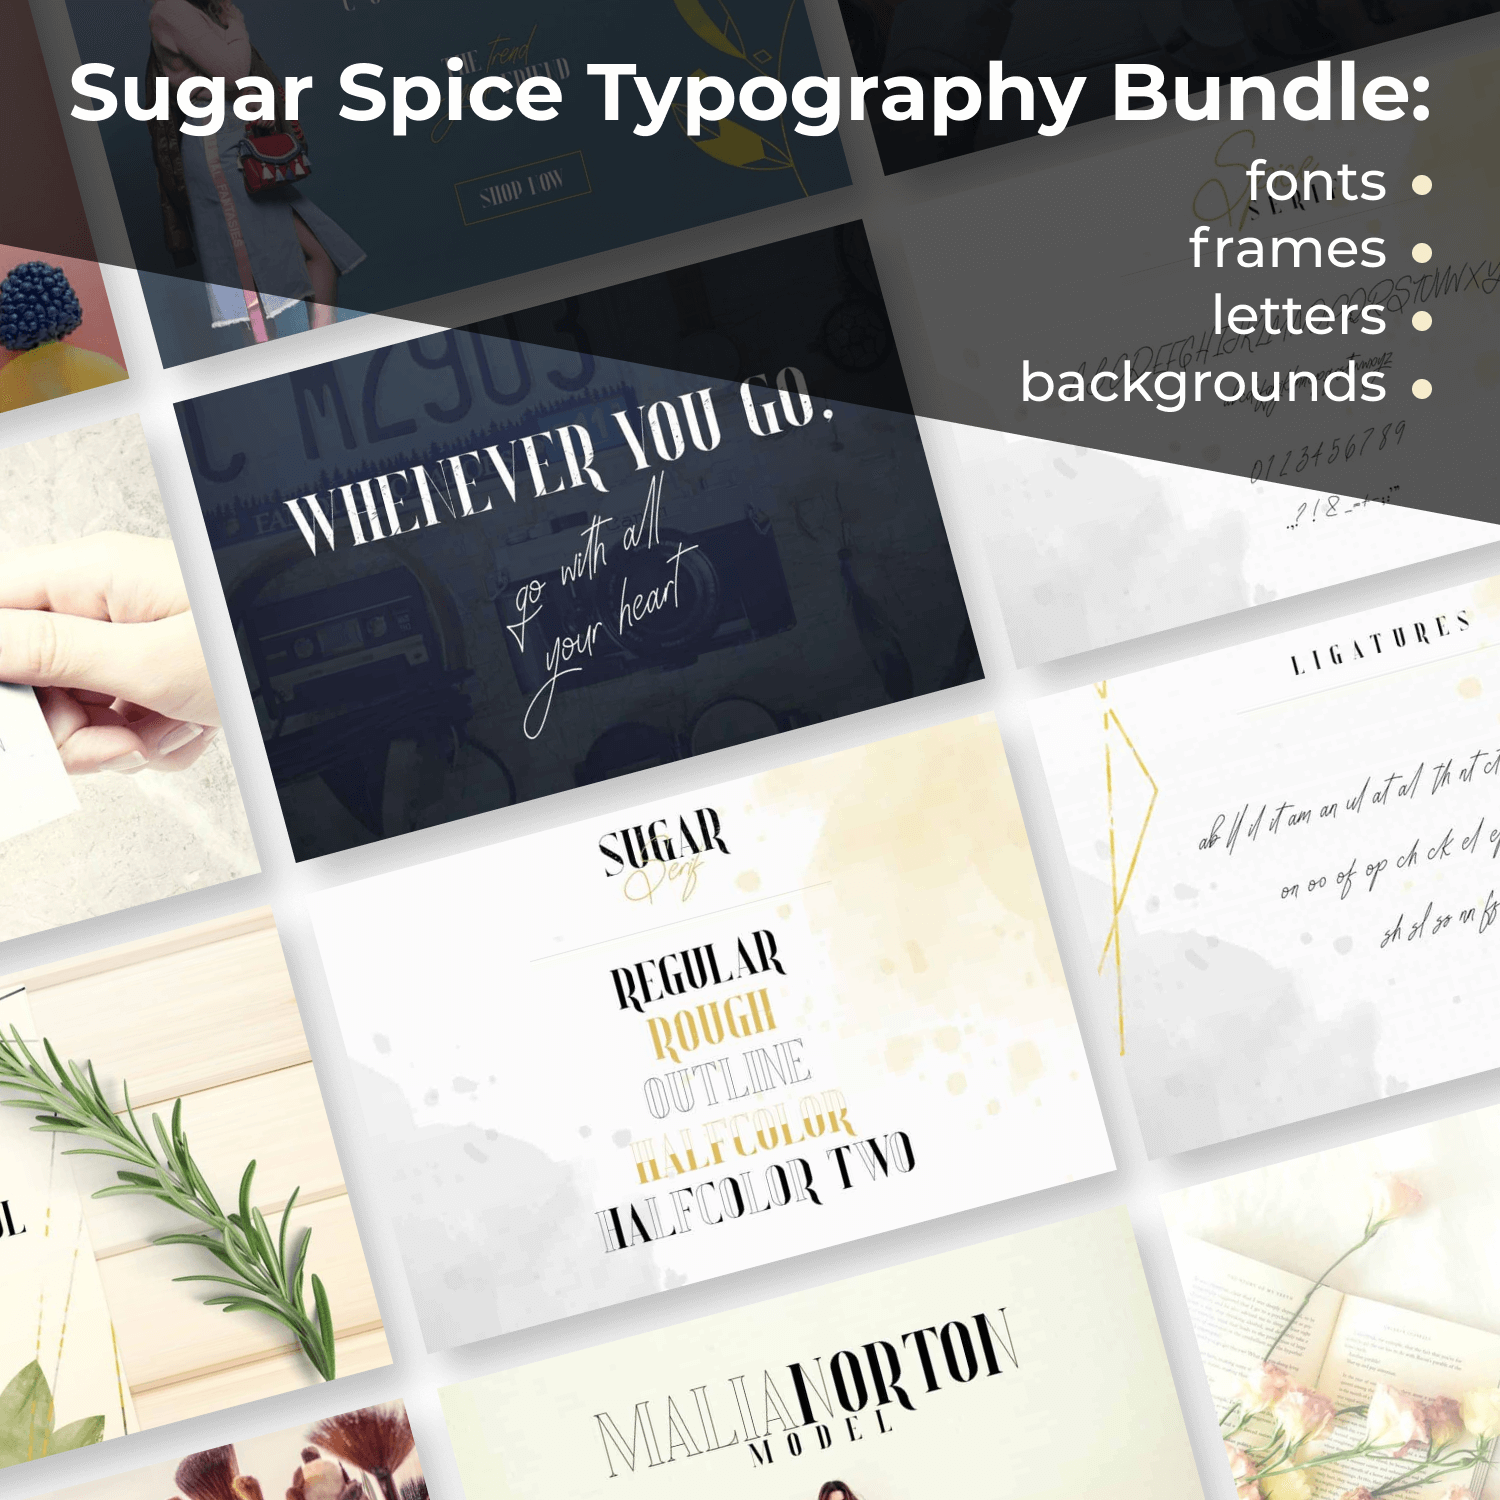 Sugar Spice Typography Bundle: fonts, frames, letters, backgrounds cover image.